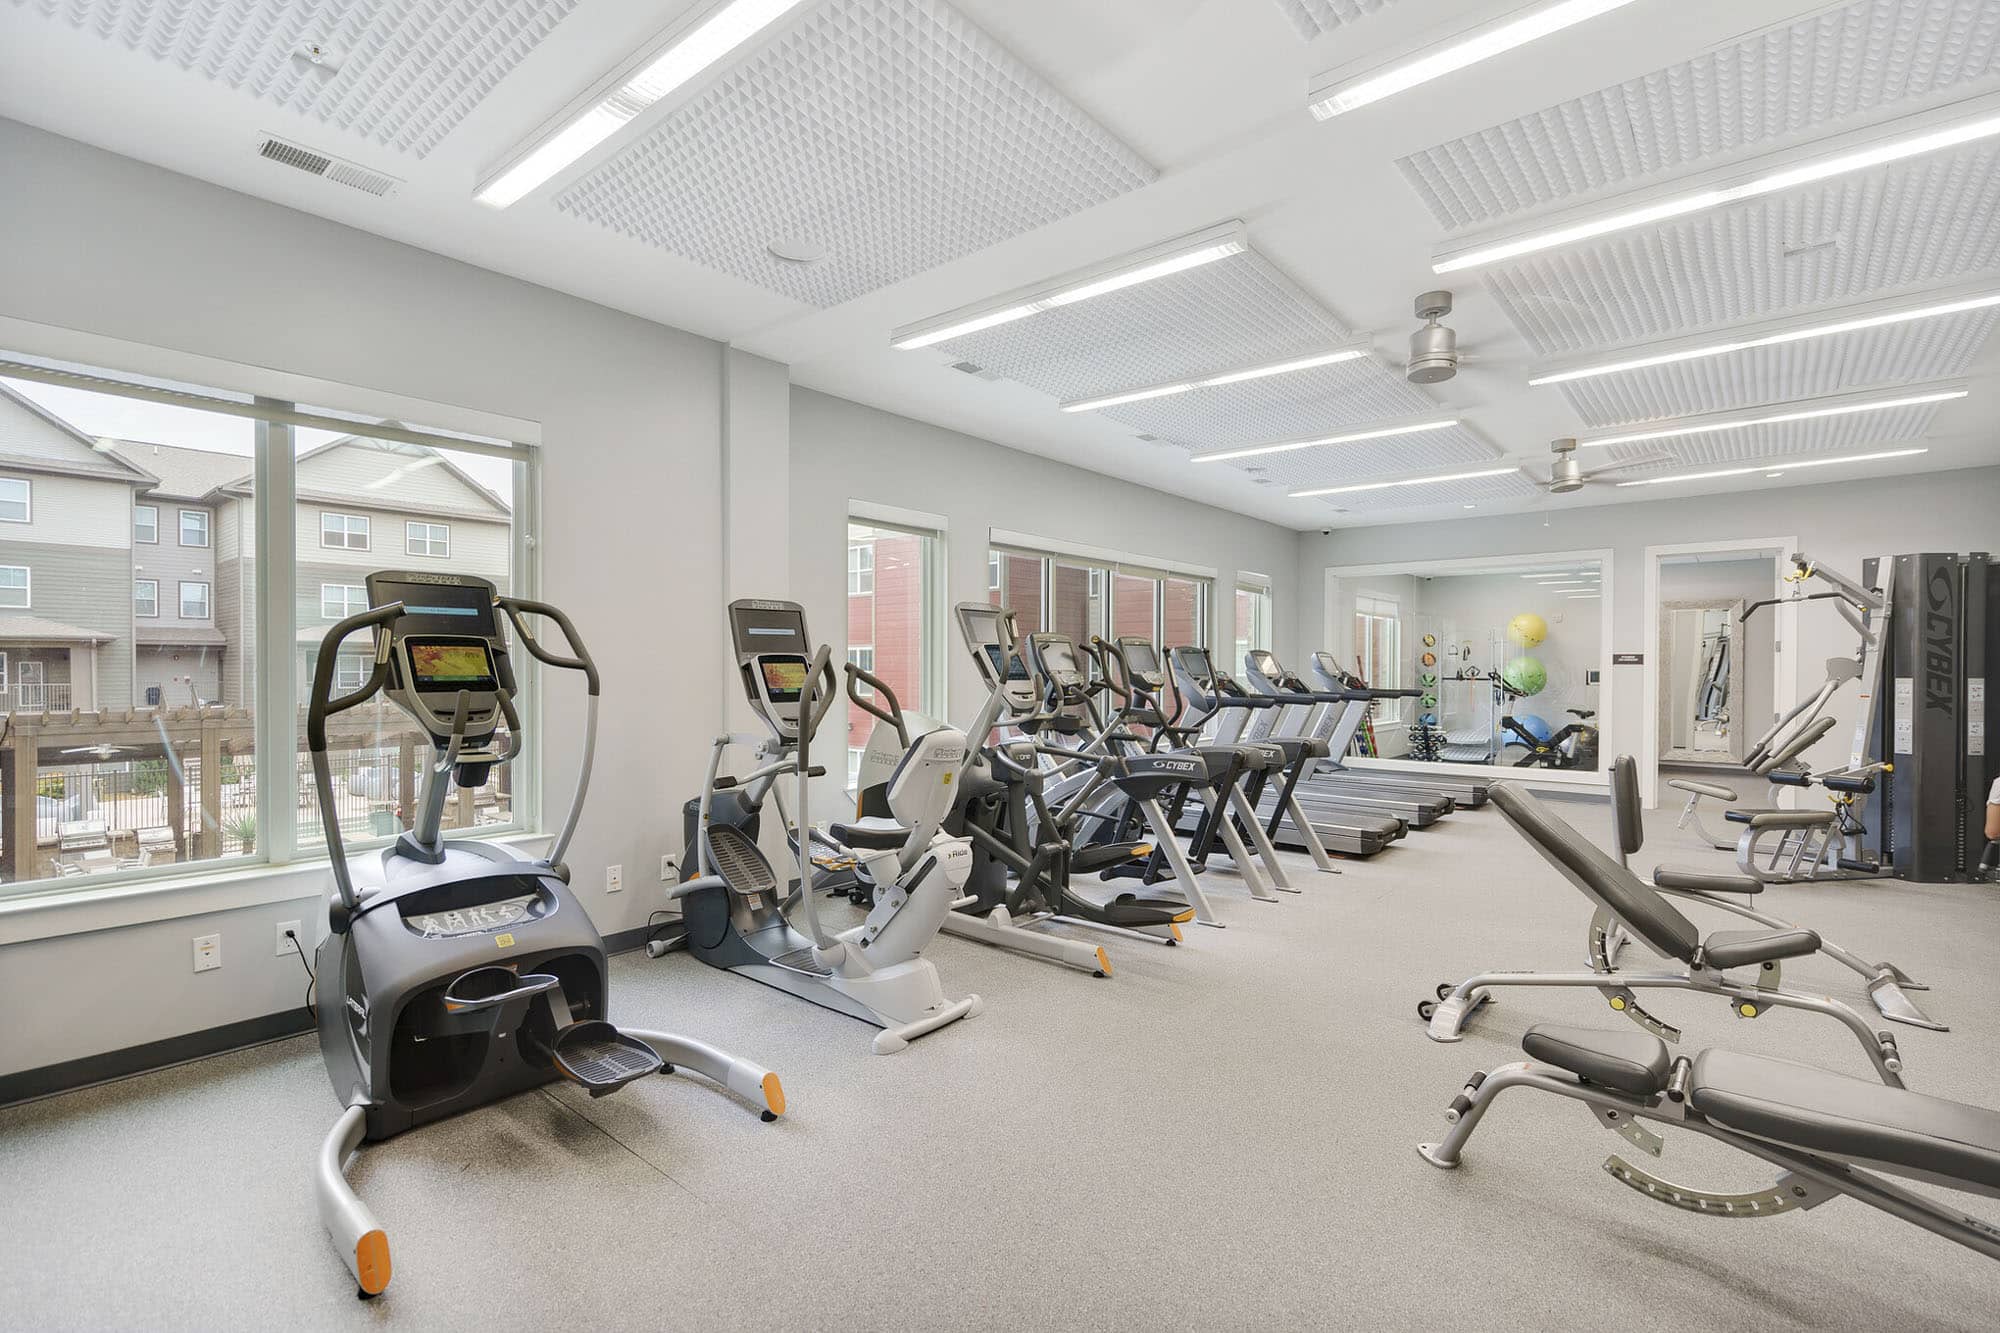 Fitness center in Lubbock apartment